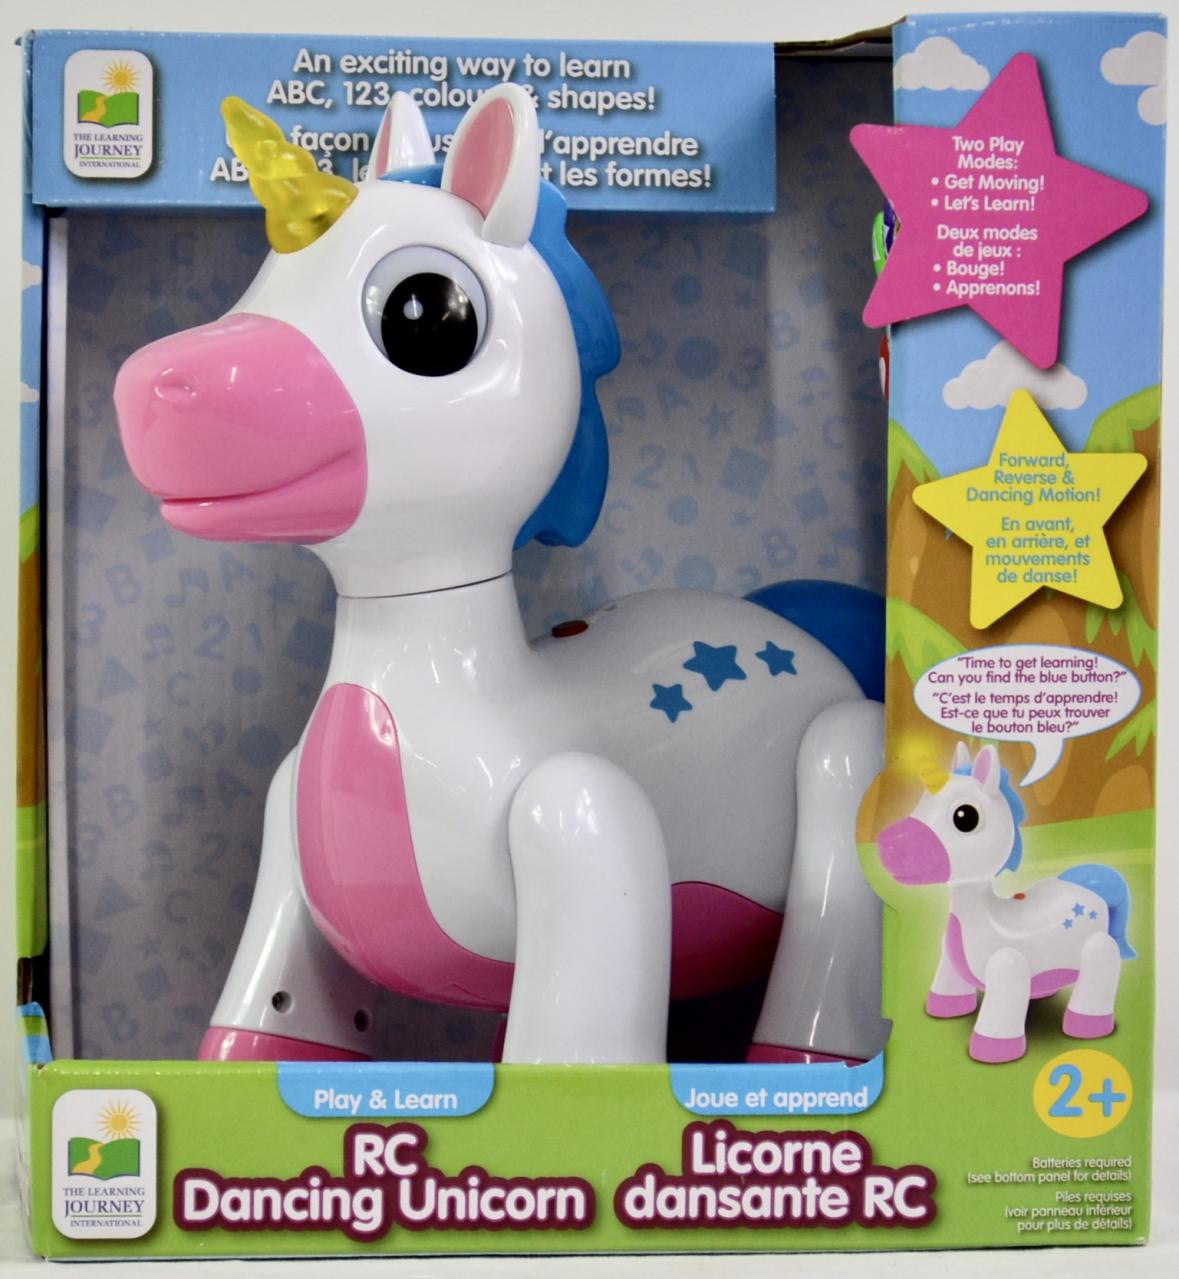 Play & Learn RC Dancing Unicorn 